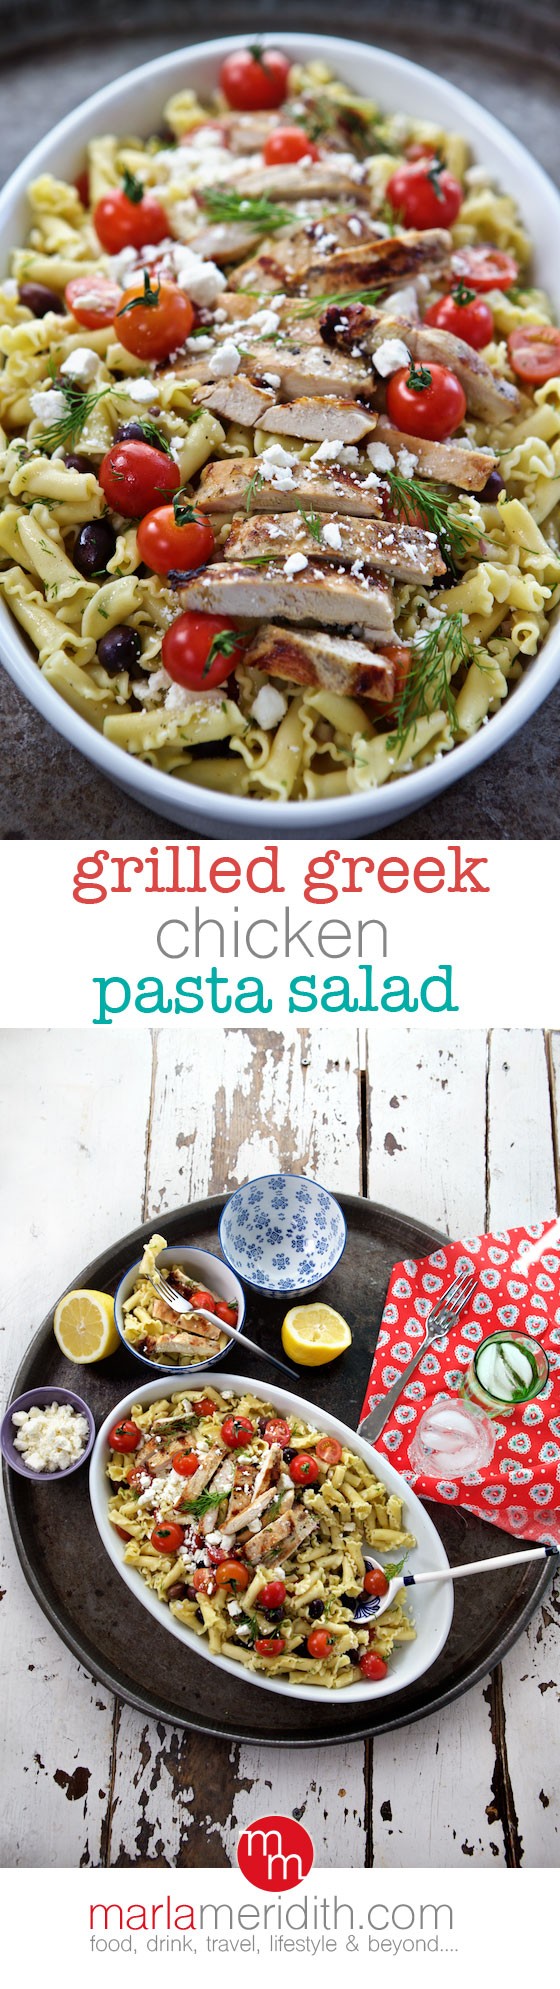 Grilled Greek Chicken Pasta Salad | MarlaMeridith.com ( @marlamerdith )